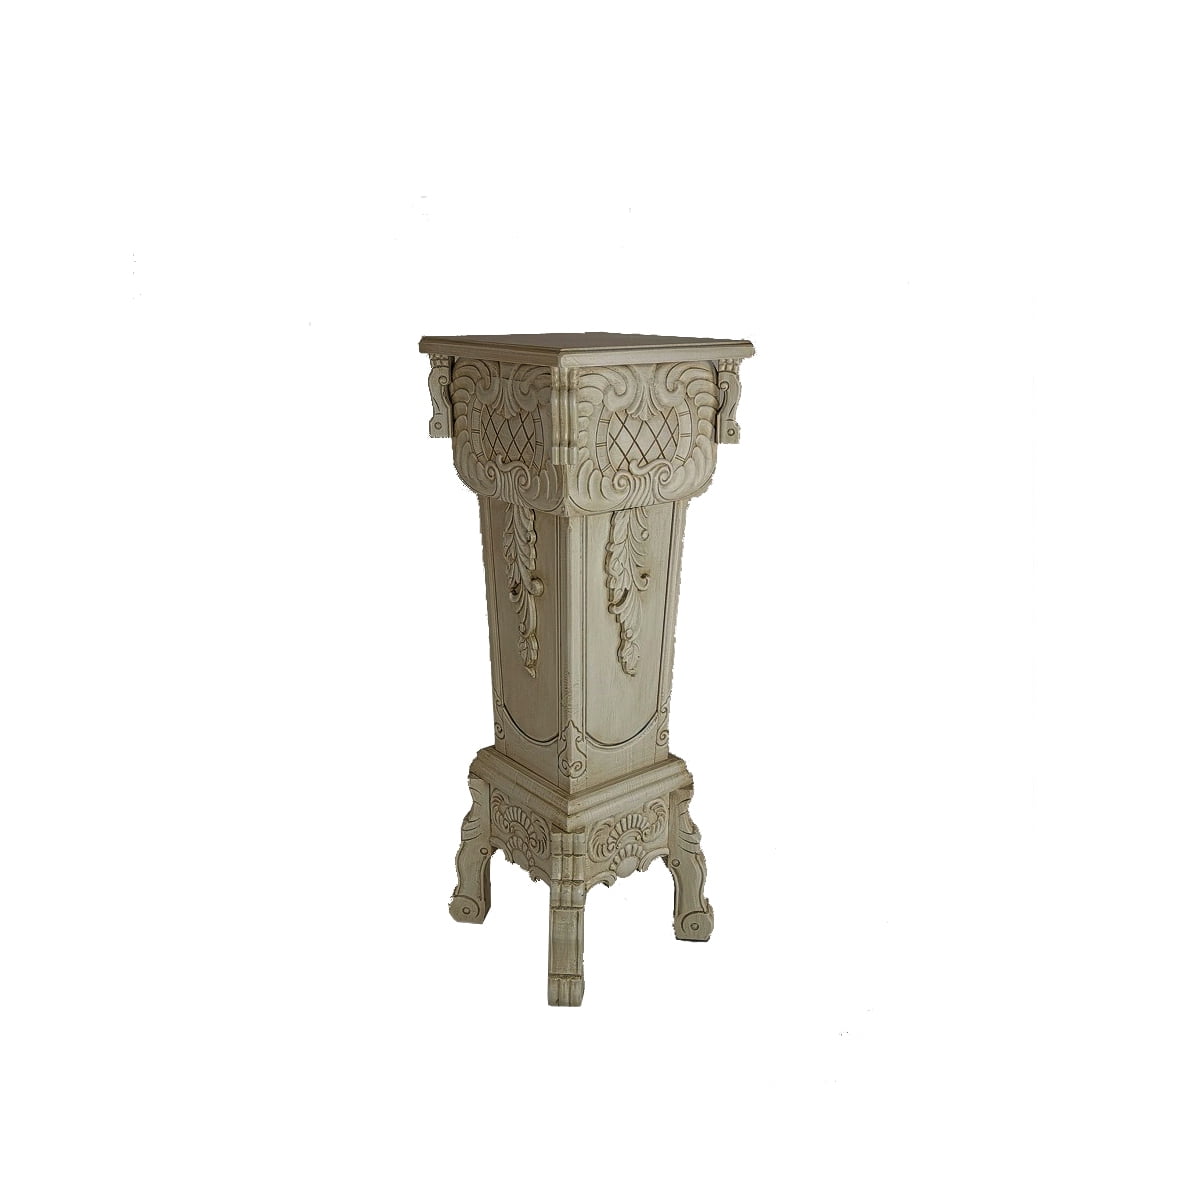 Bm210161 Elegantly Engraved Wooden Frame Pedestal Stand, White